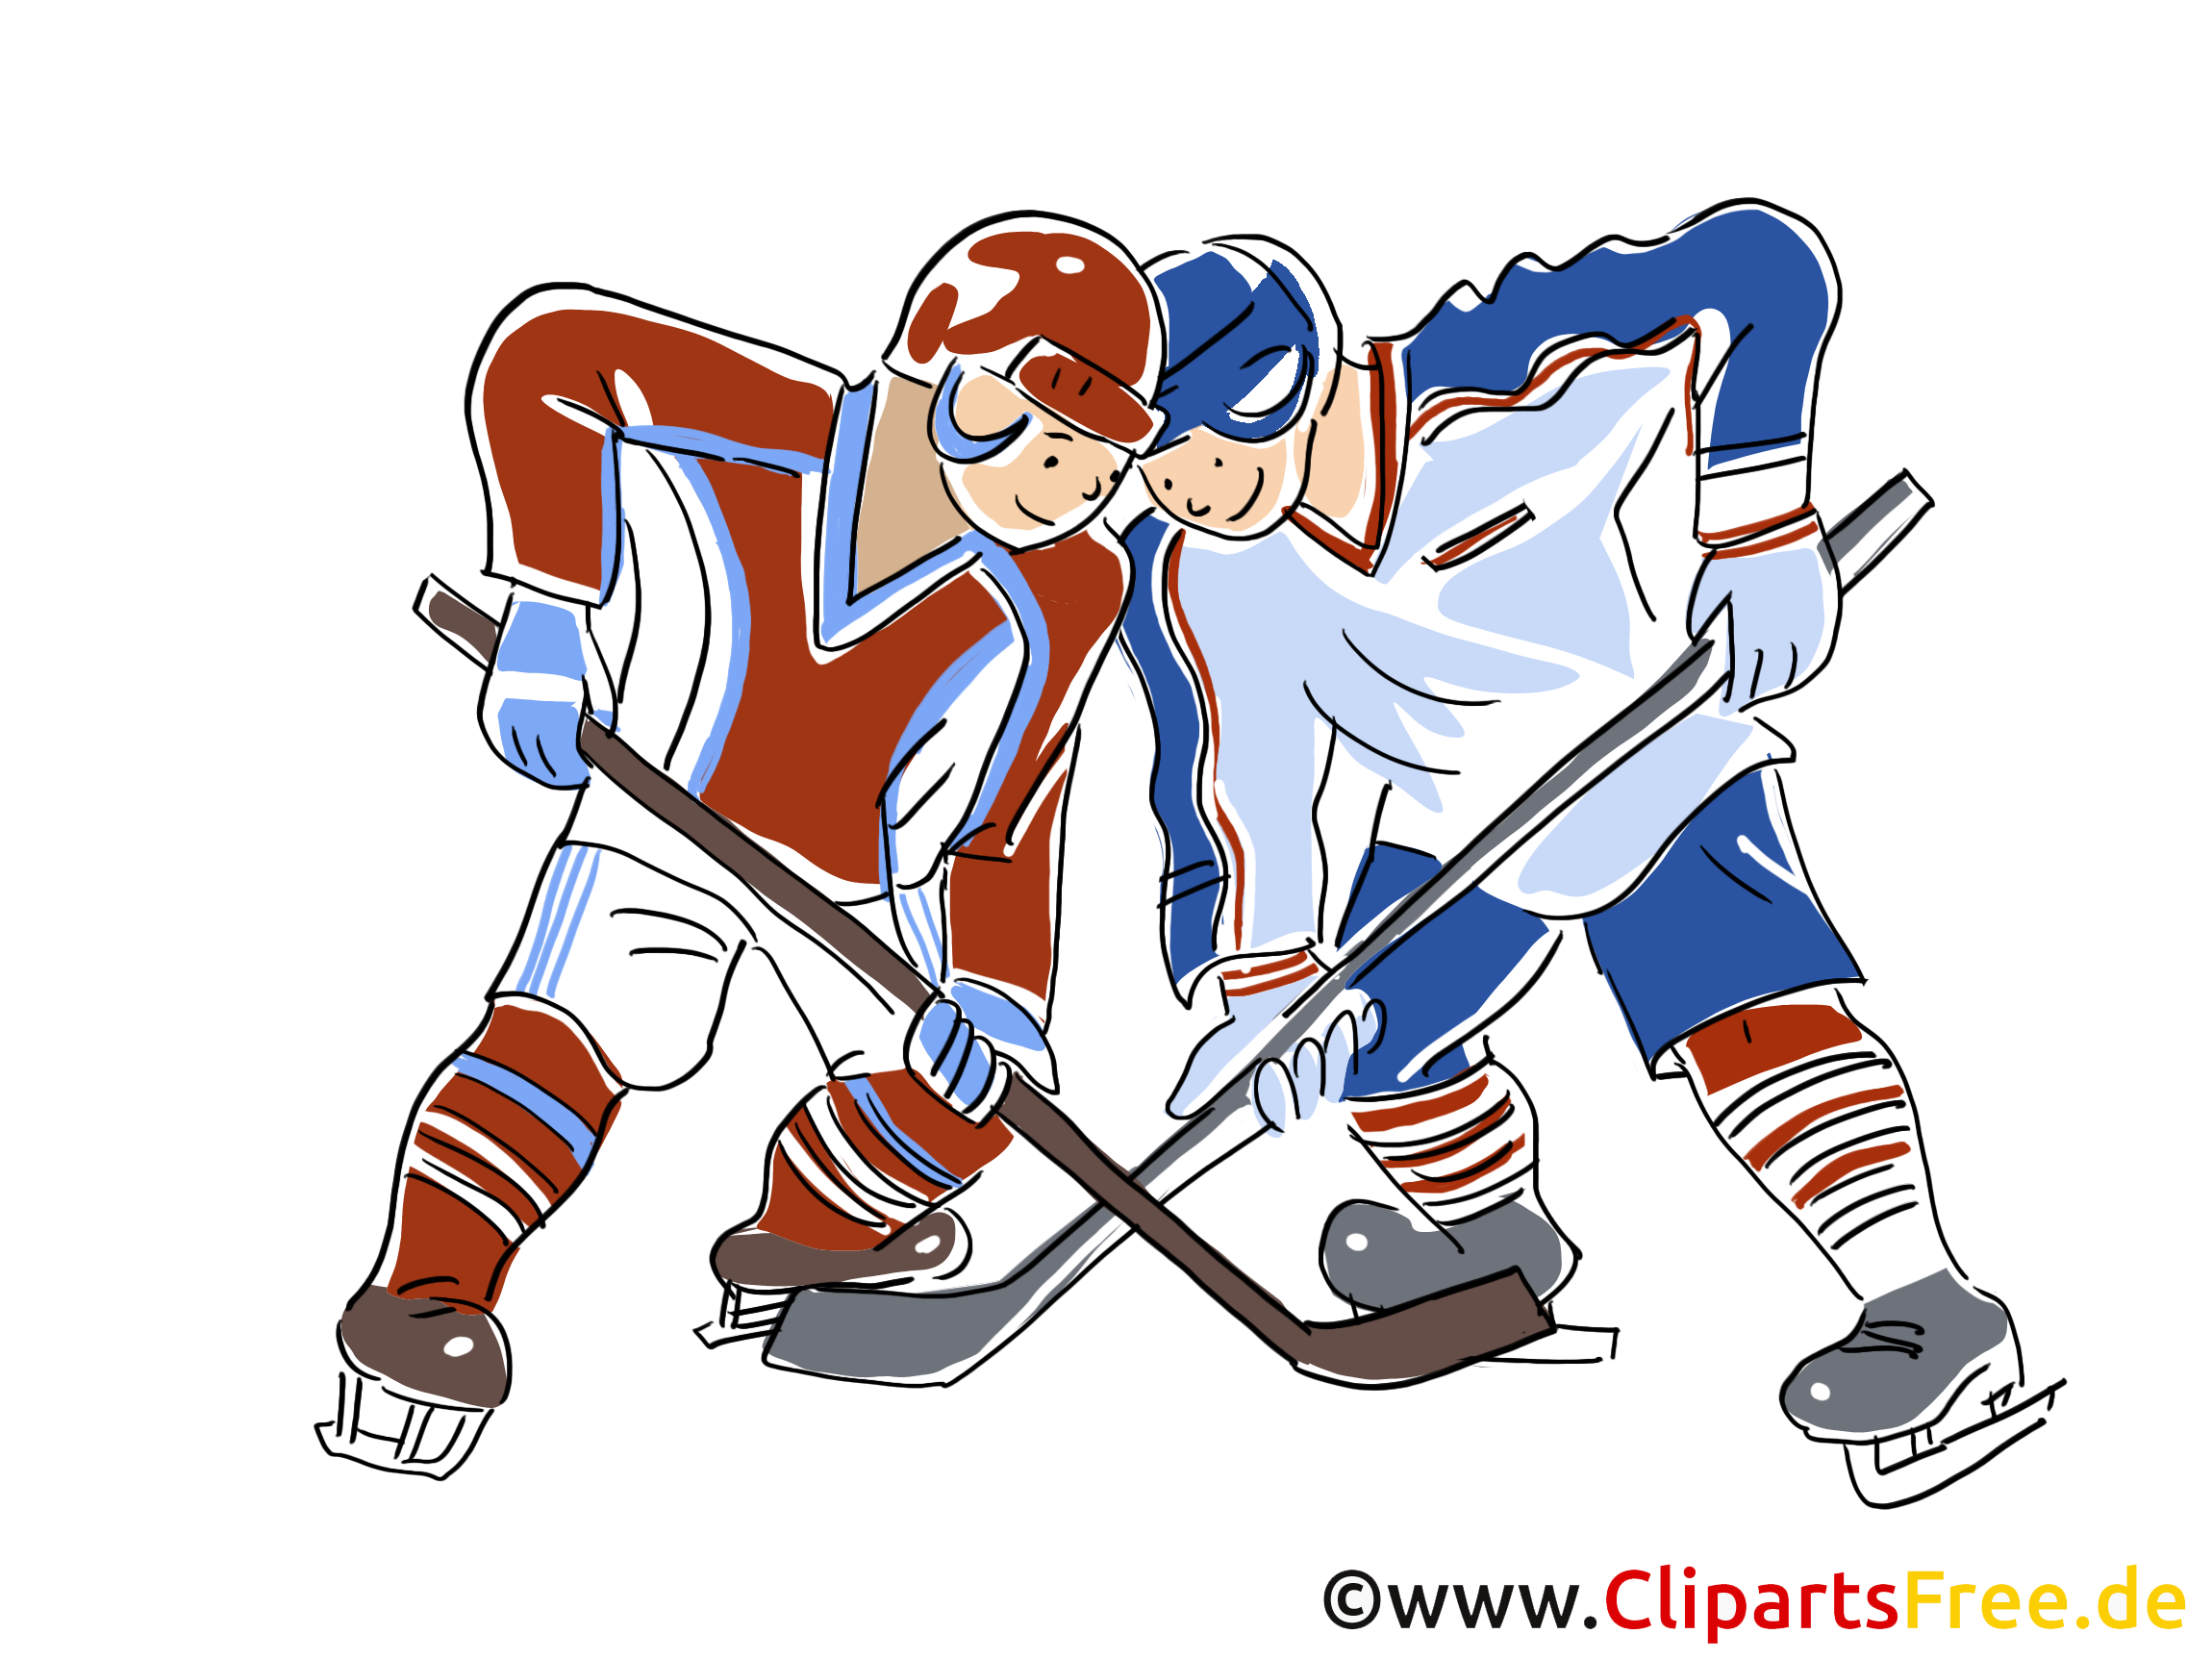 Jeu image gratuite – Hockey clipart